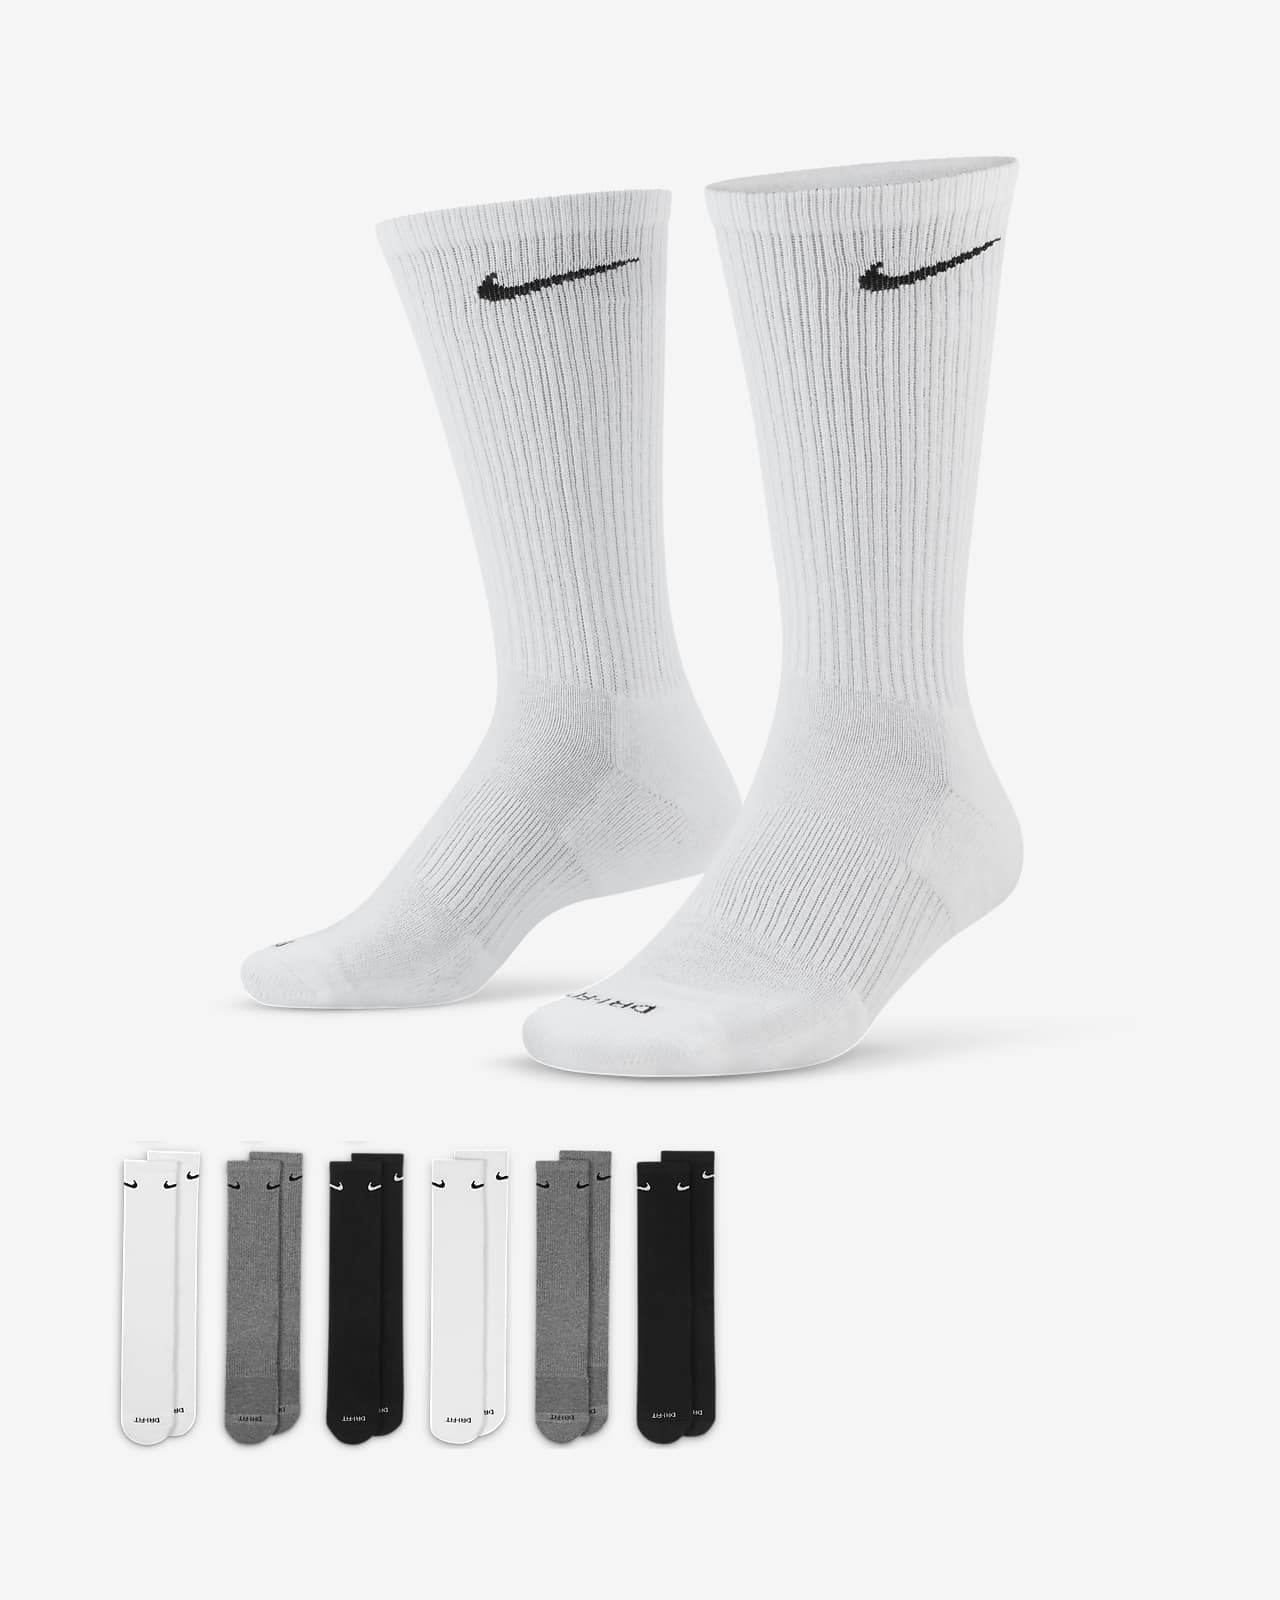 Calcetines largos de entrenamiento Nike Cushioned pares). Nike.com